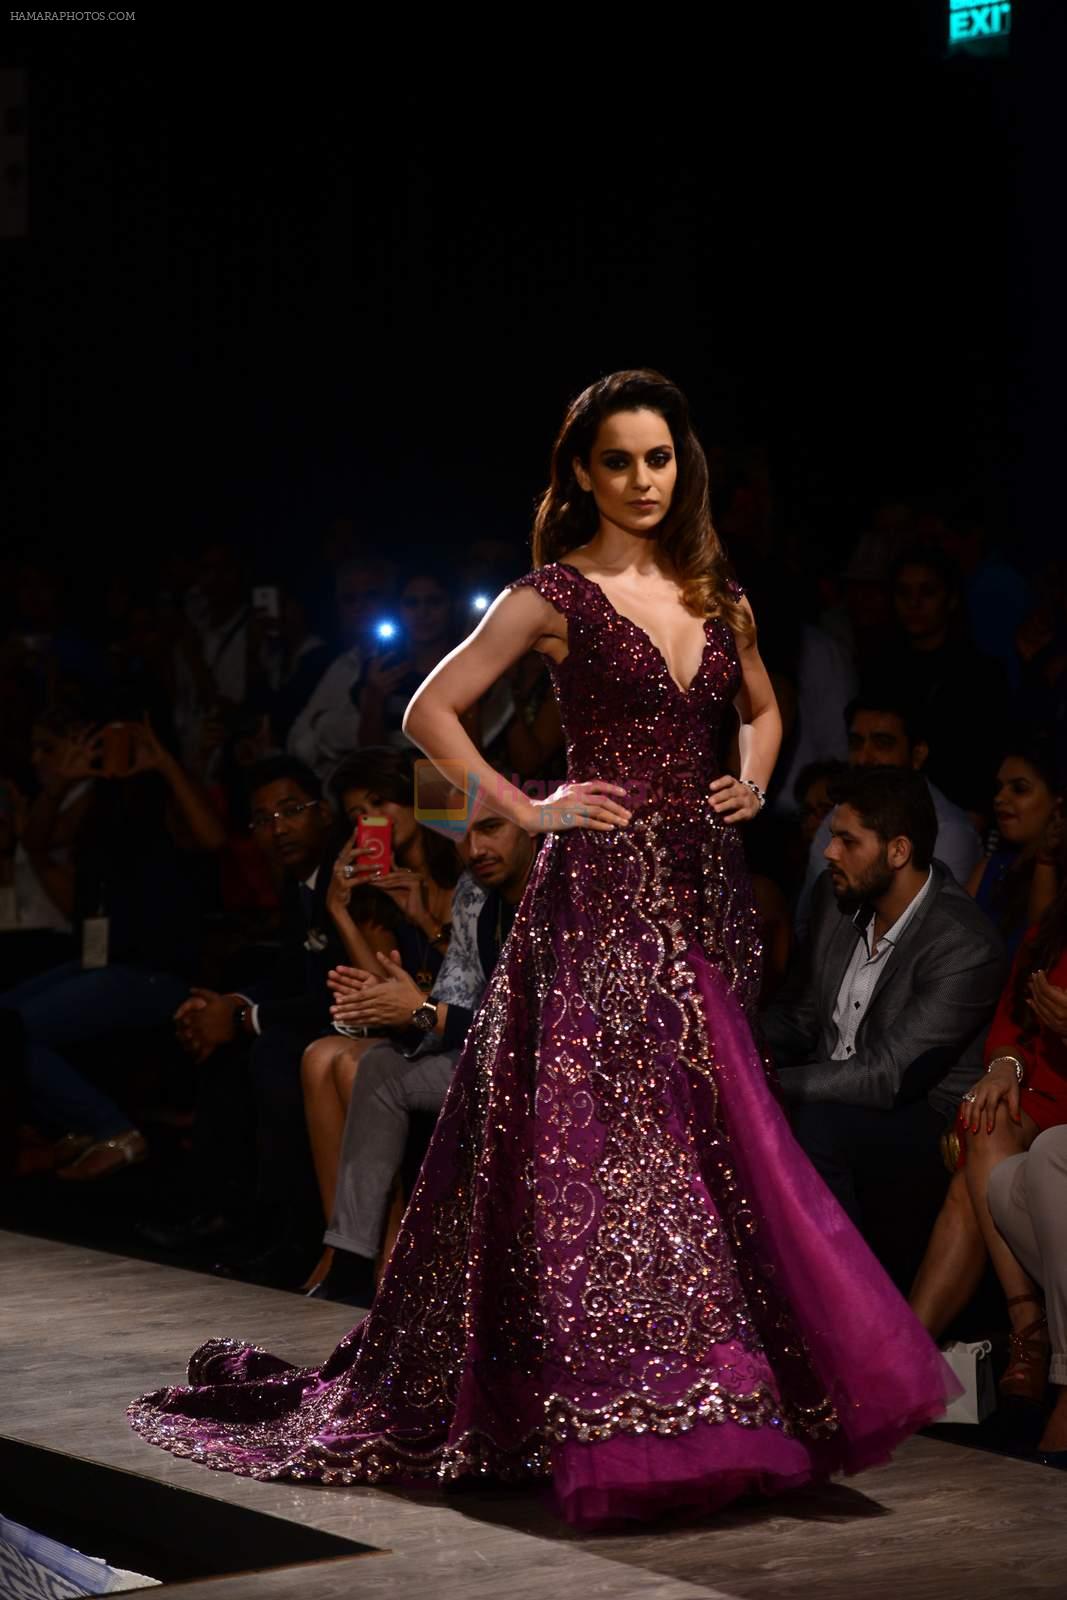 Kangana Ranaut walk for Manav Gangwani Show at India Couture Week 2015 Day 5 on 1st Aug 2015